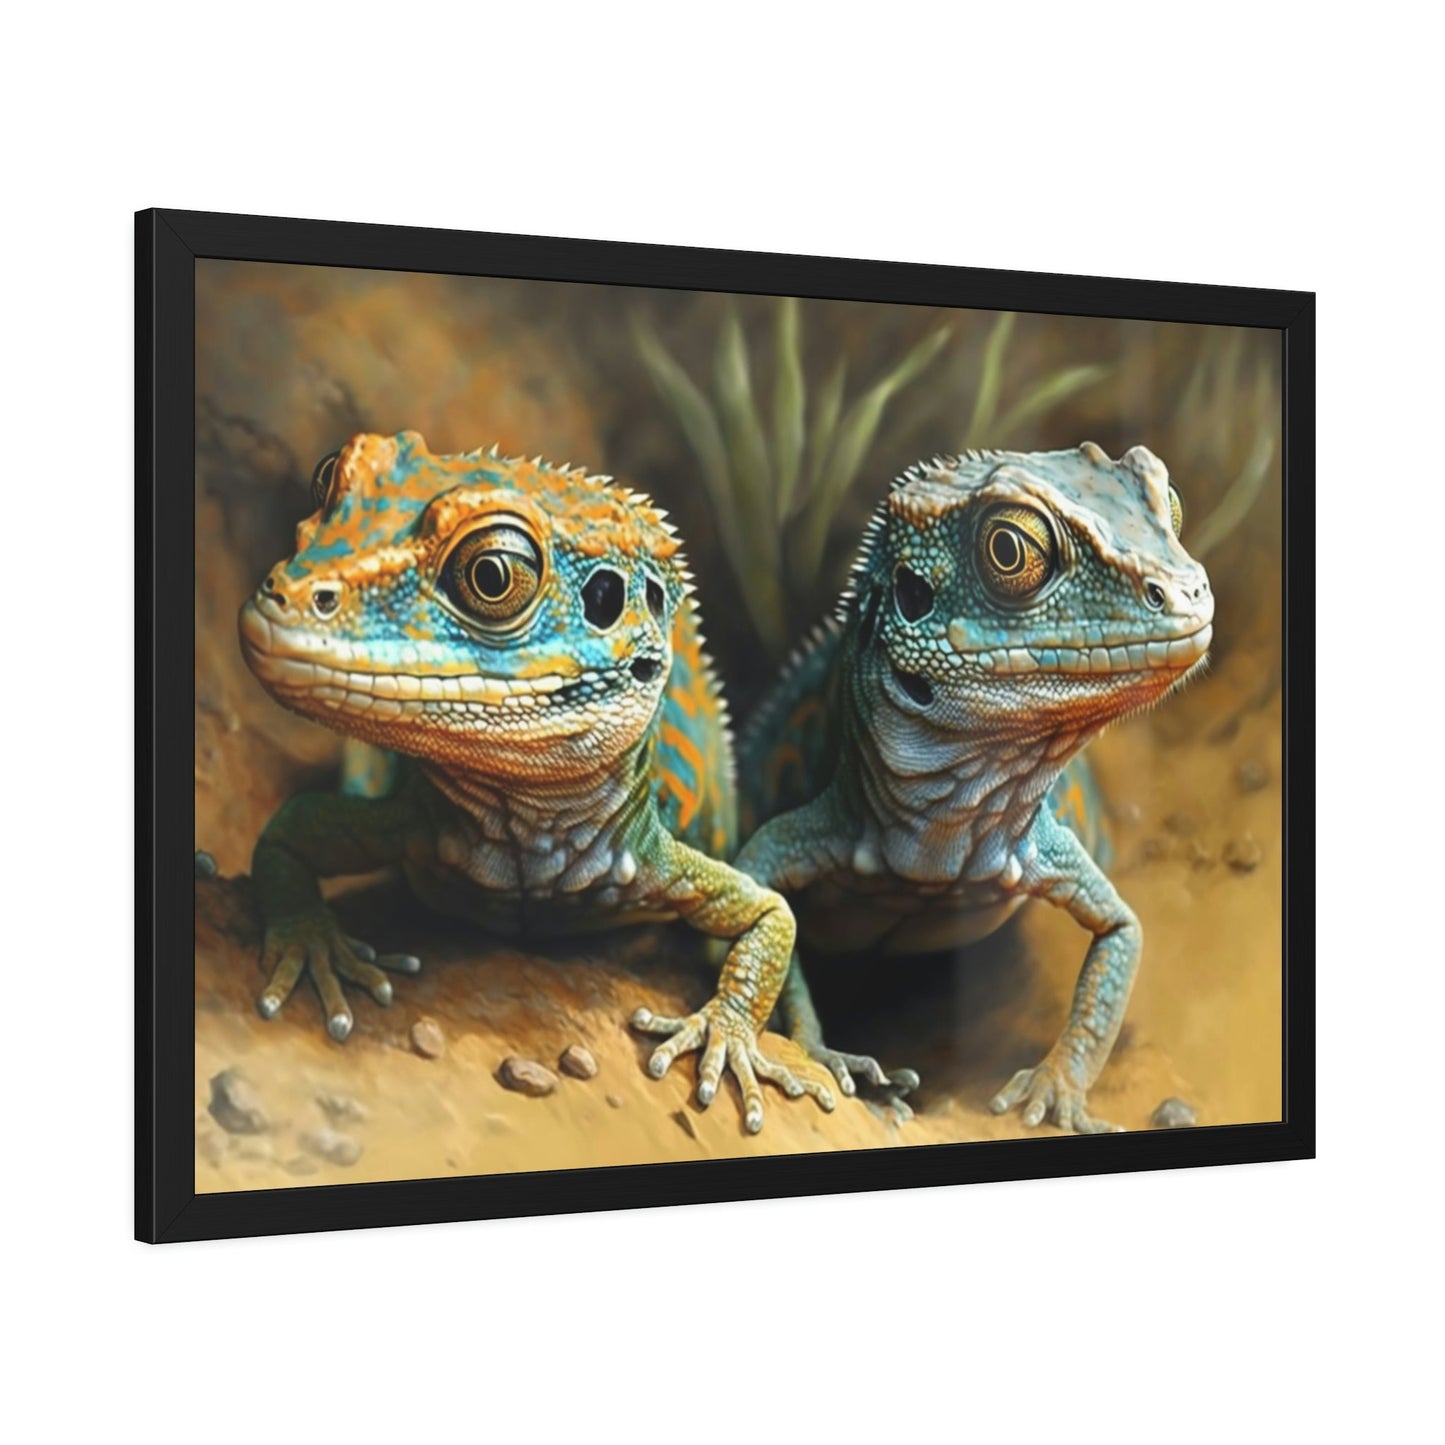 Lizard Kingdom: Canvas Print of Lizards in their Natural Habitat